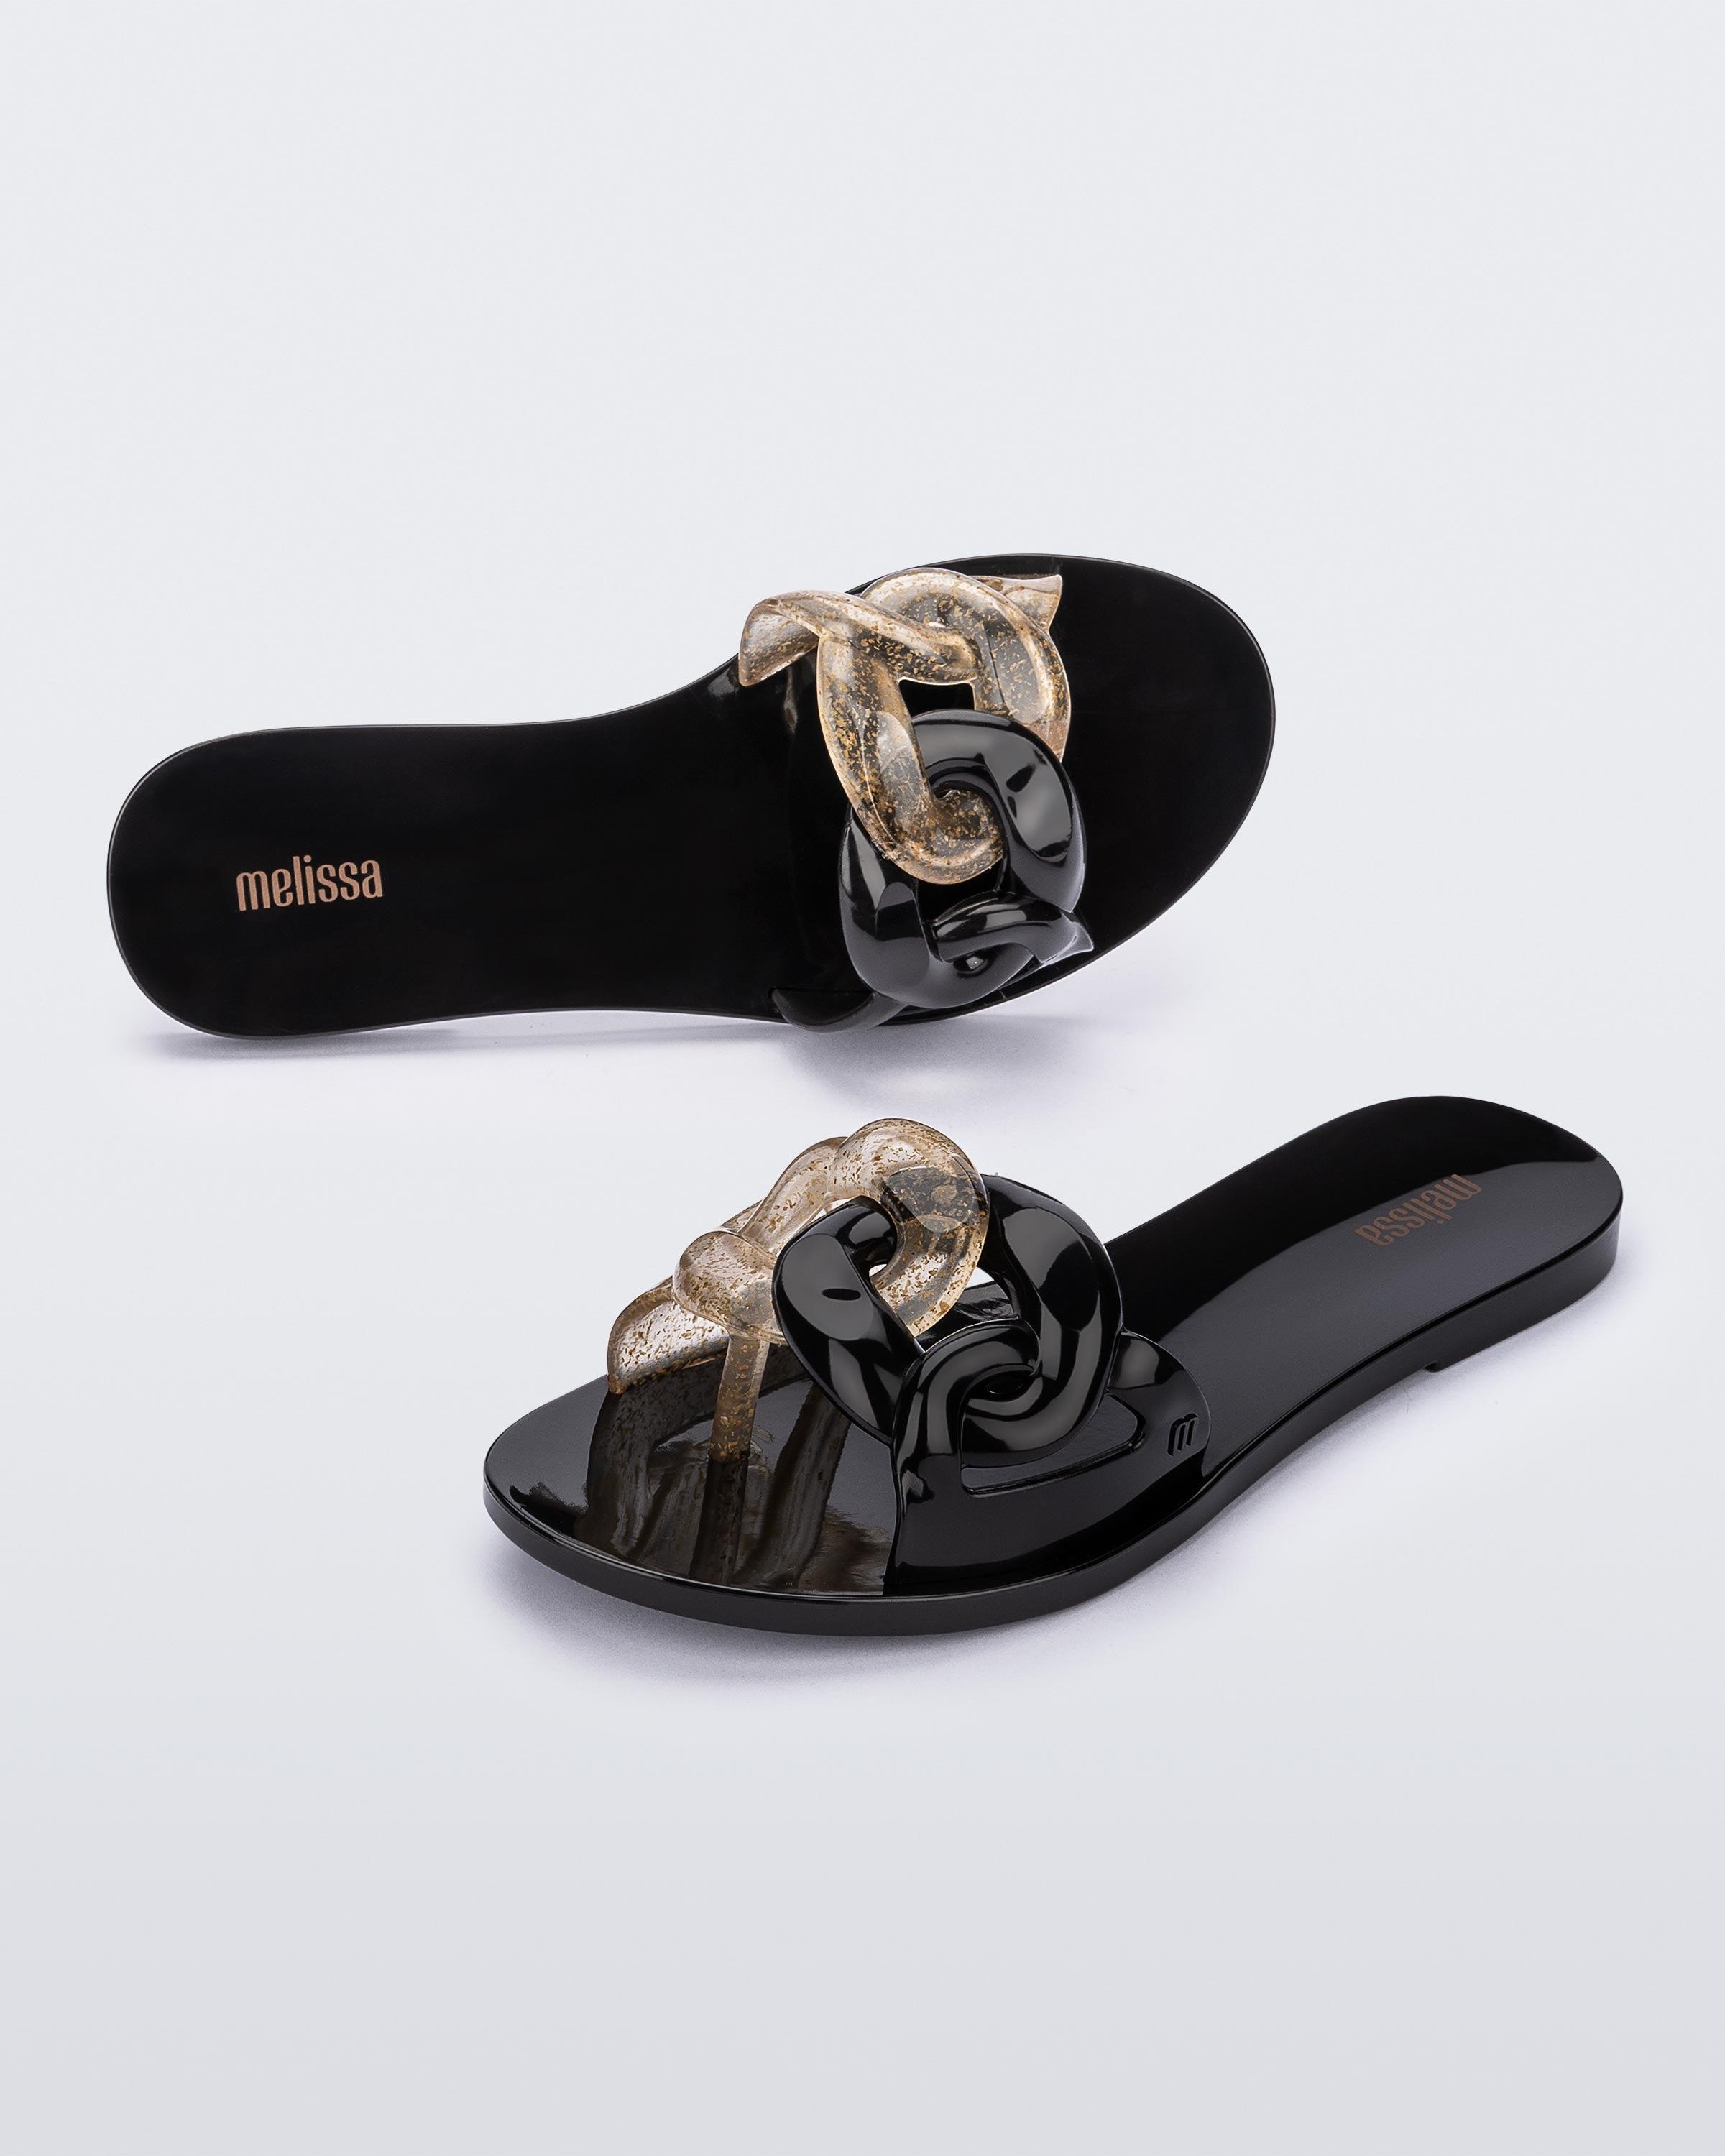 Kensie Womens Valery B Studded Flat Sandals - Black Product Image